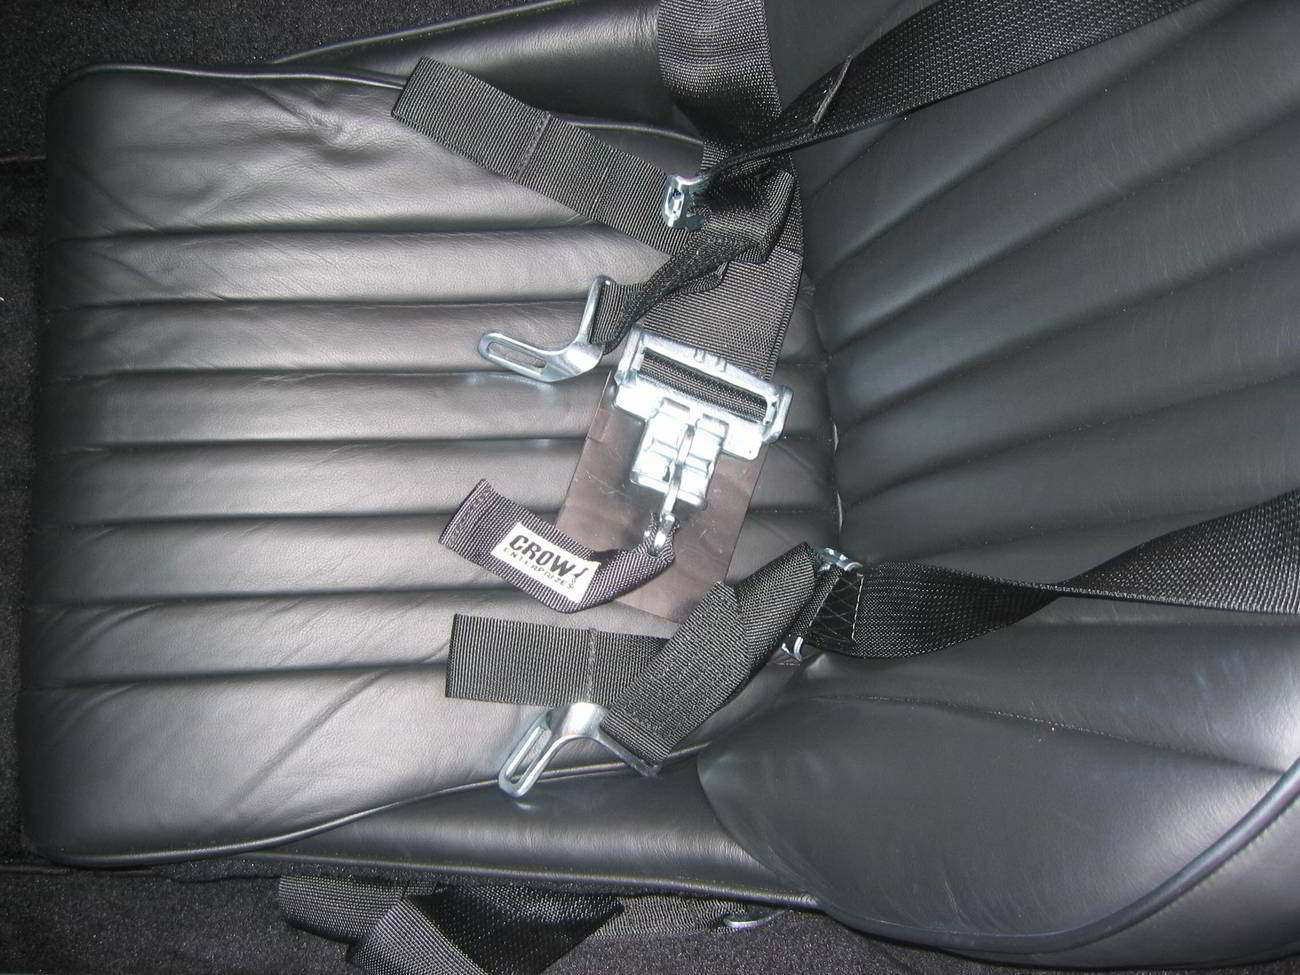 seatbelts